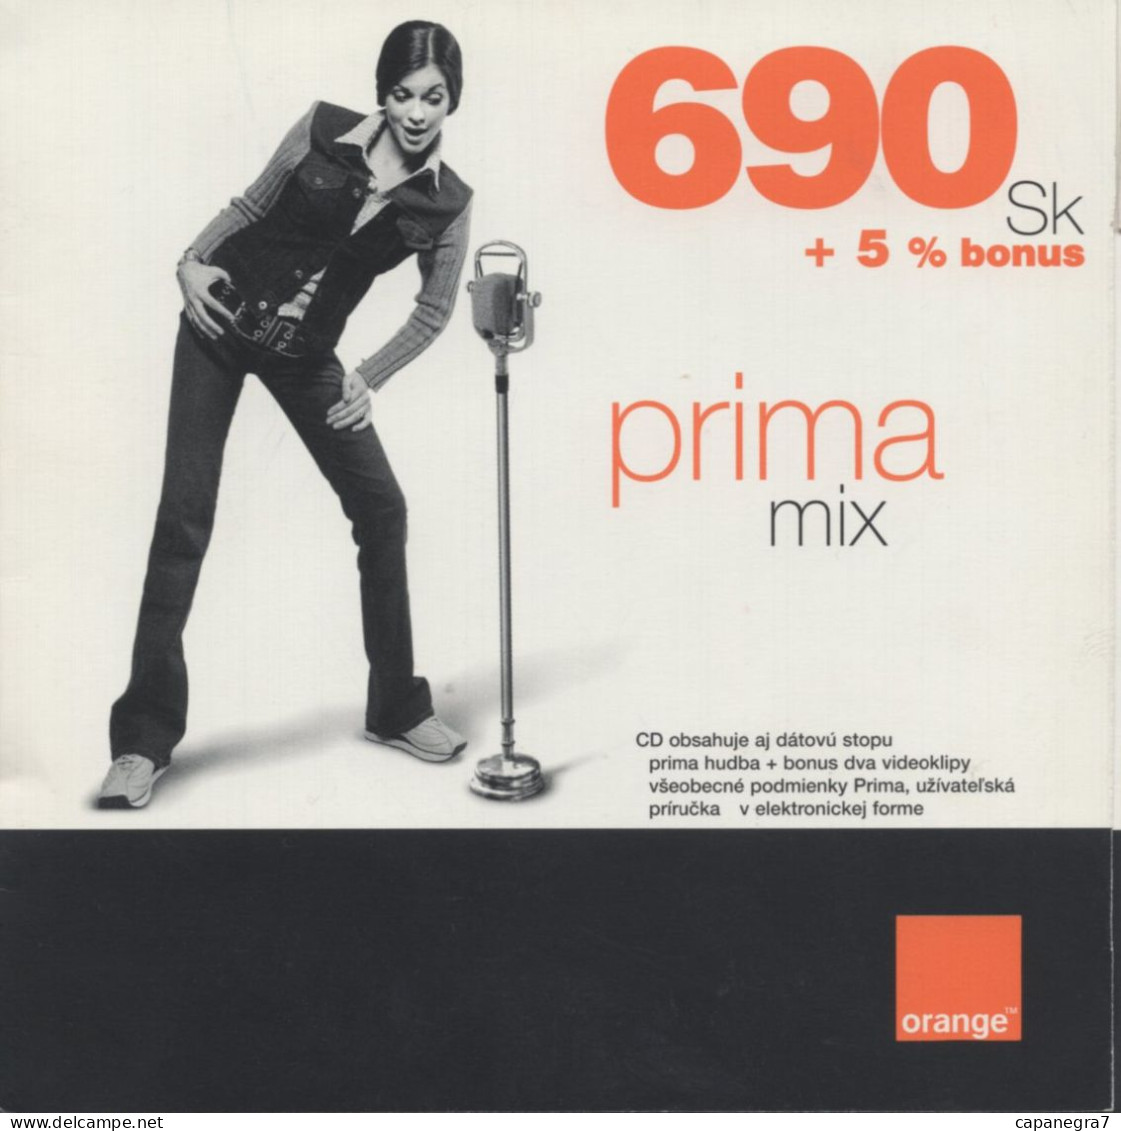 Prima Selection, Prima Mix 690 Sk, Polycarbonate Plastic CD, GSM Refill, Orange Slovakia, Validity 30.06.2004, Slovakia - Slowakei